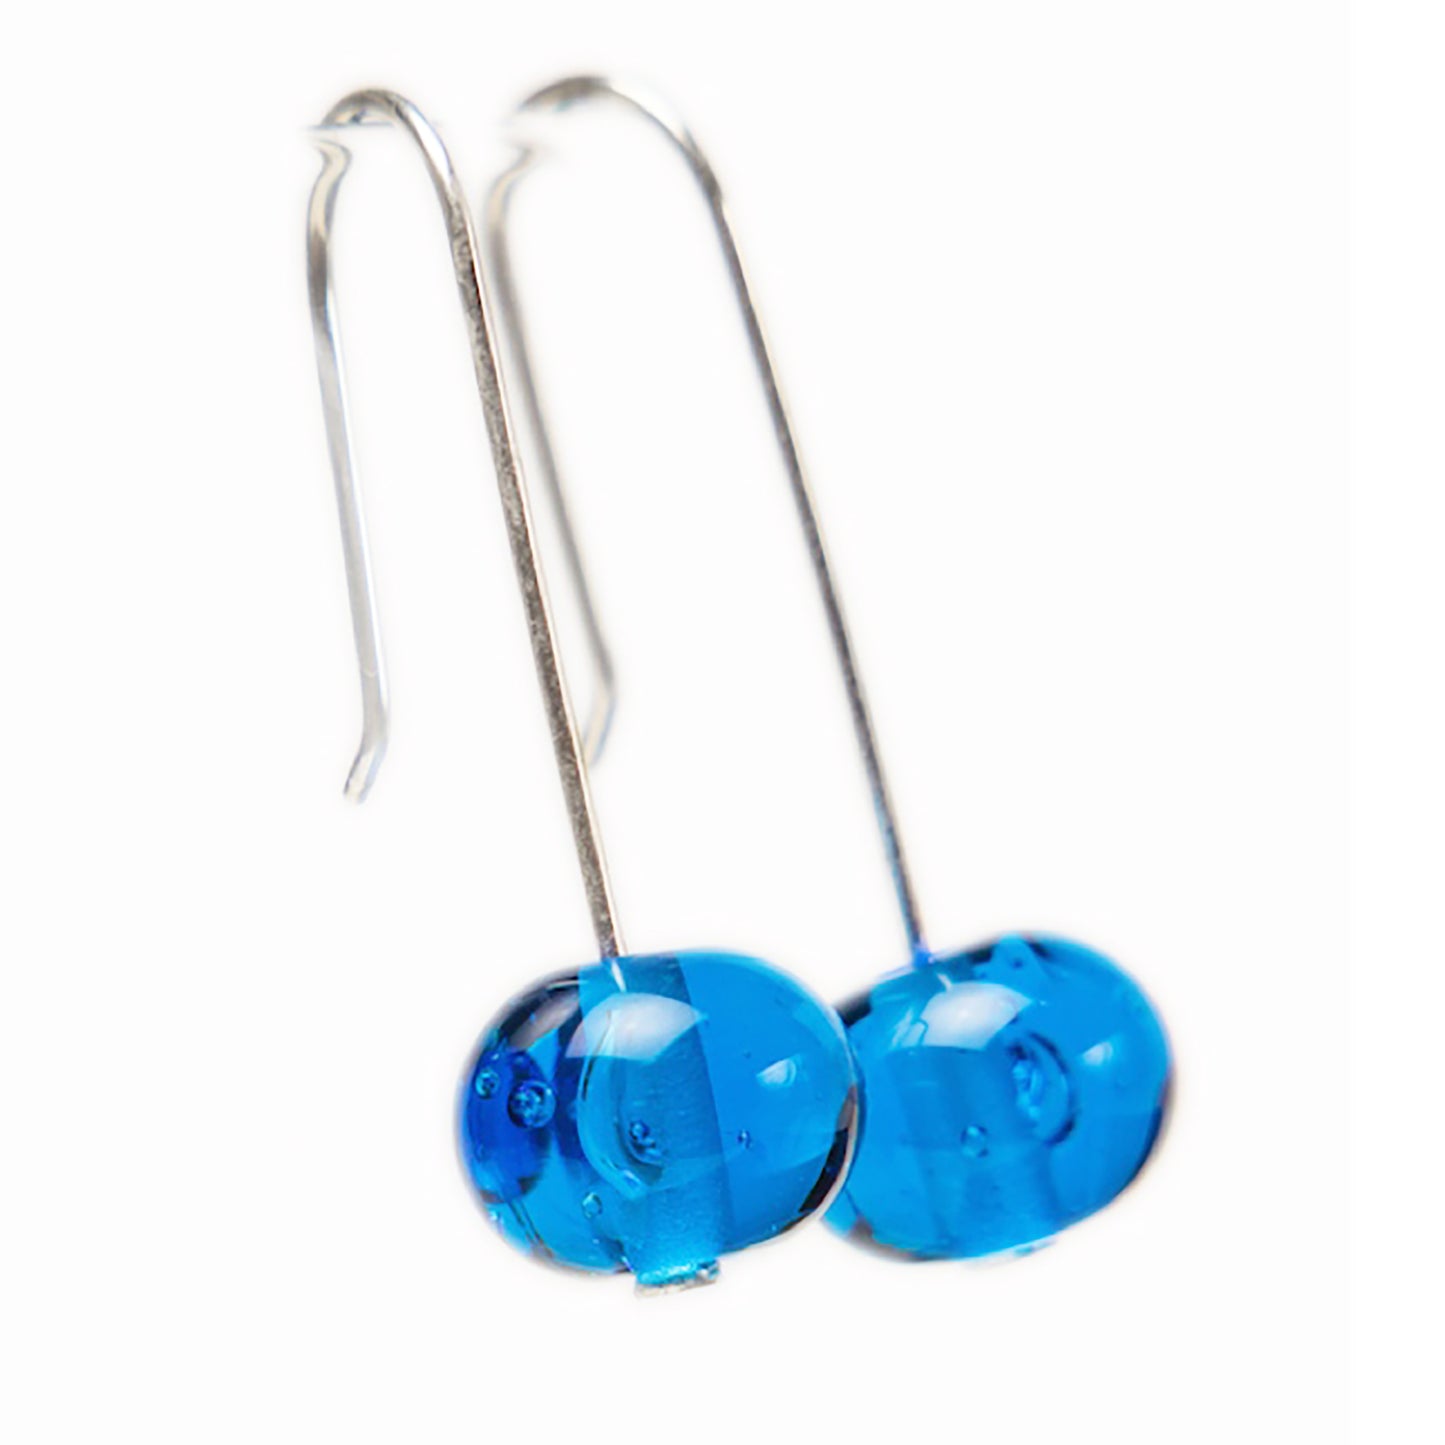 Bubble bead earrings - turquoise blue